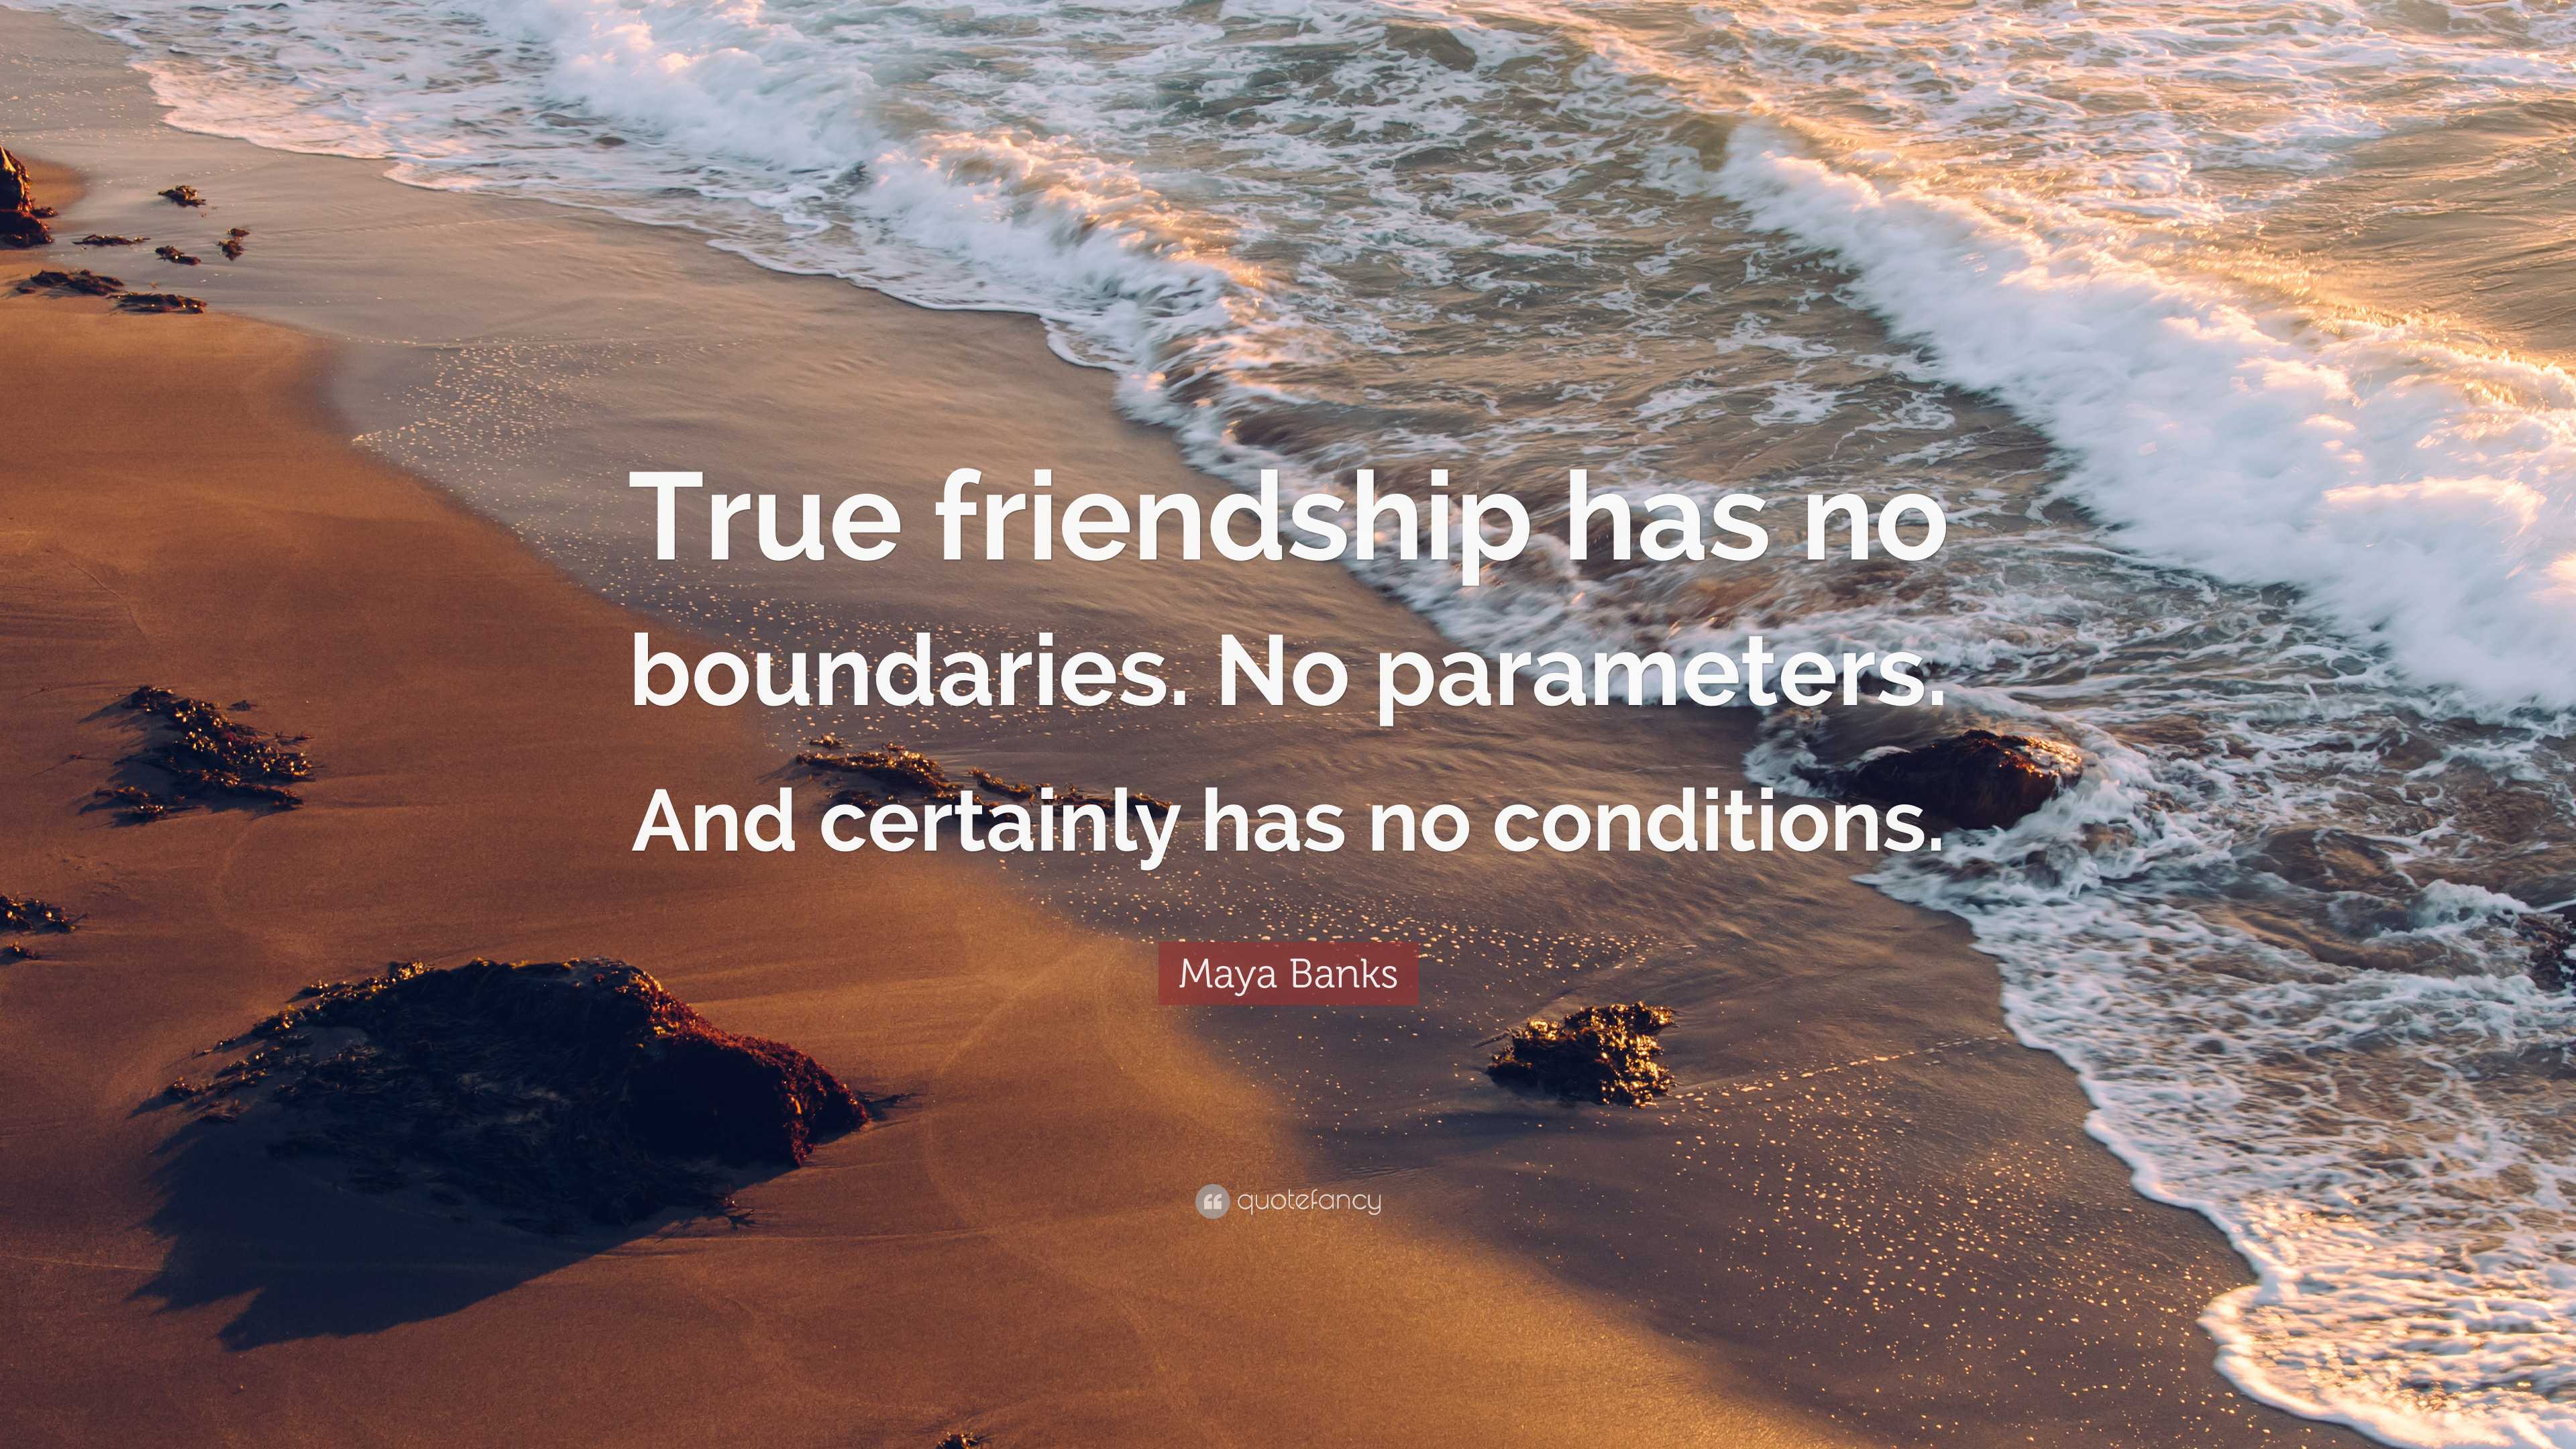 Maya Banks Quote: “True friendship has no boundaries. No